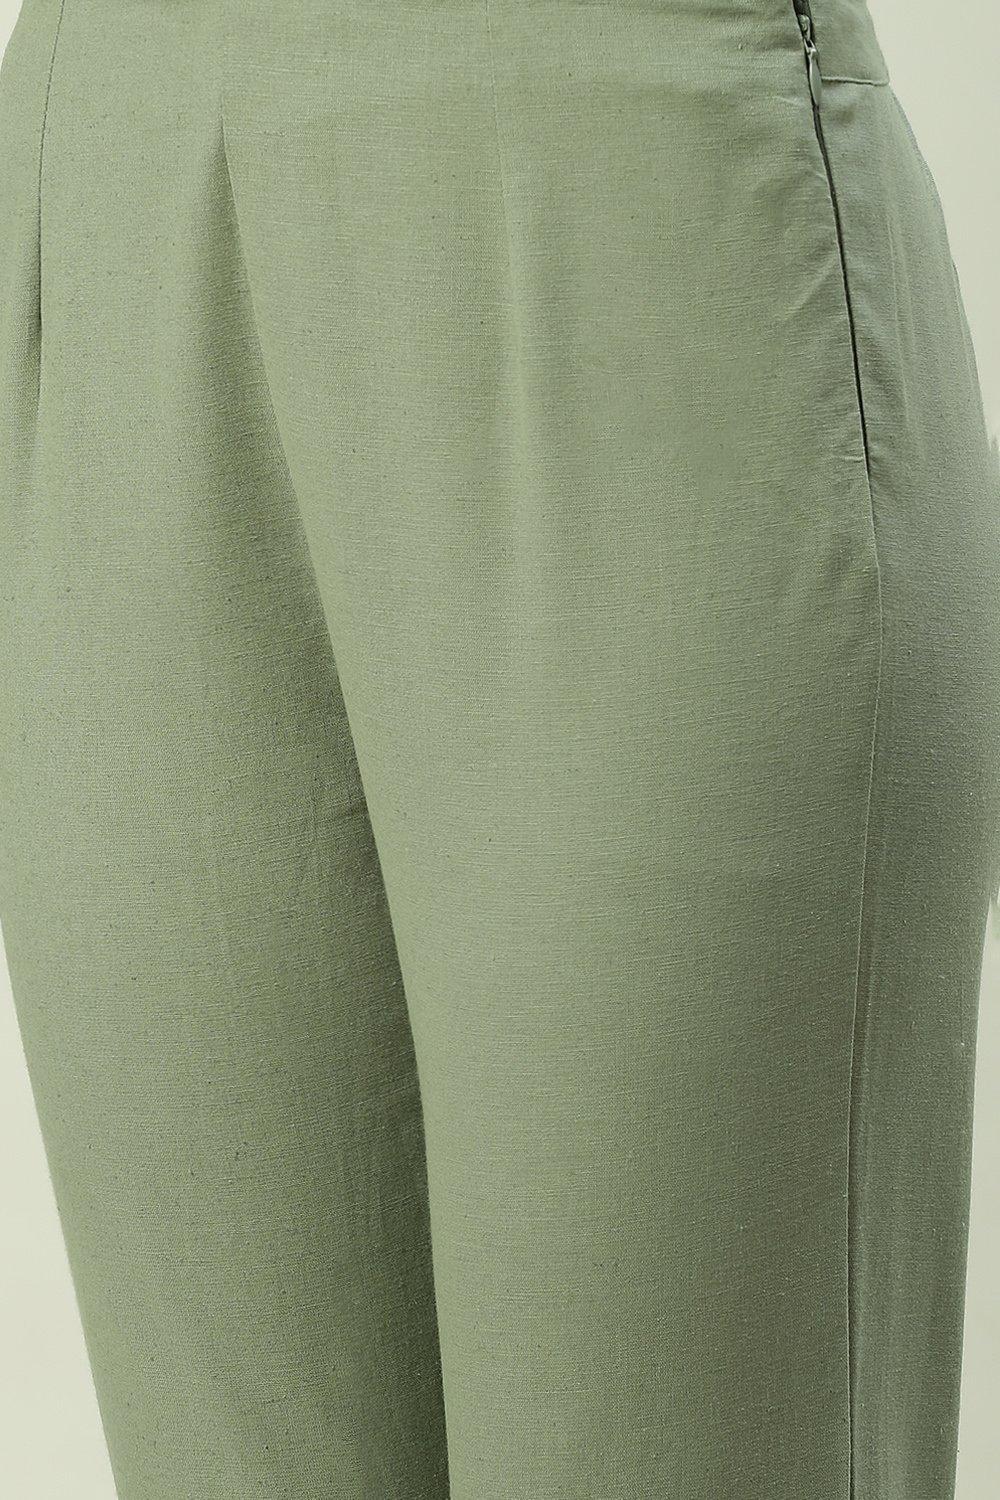 Green Bay Cotton Blend Solid Pants image number 1